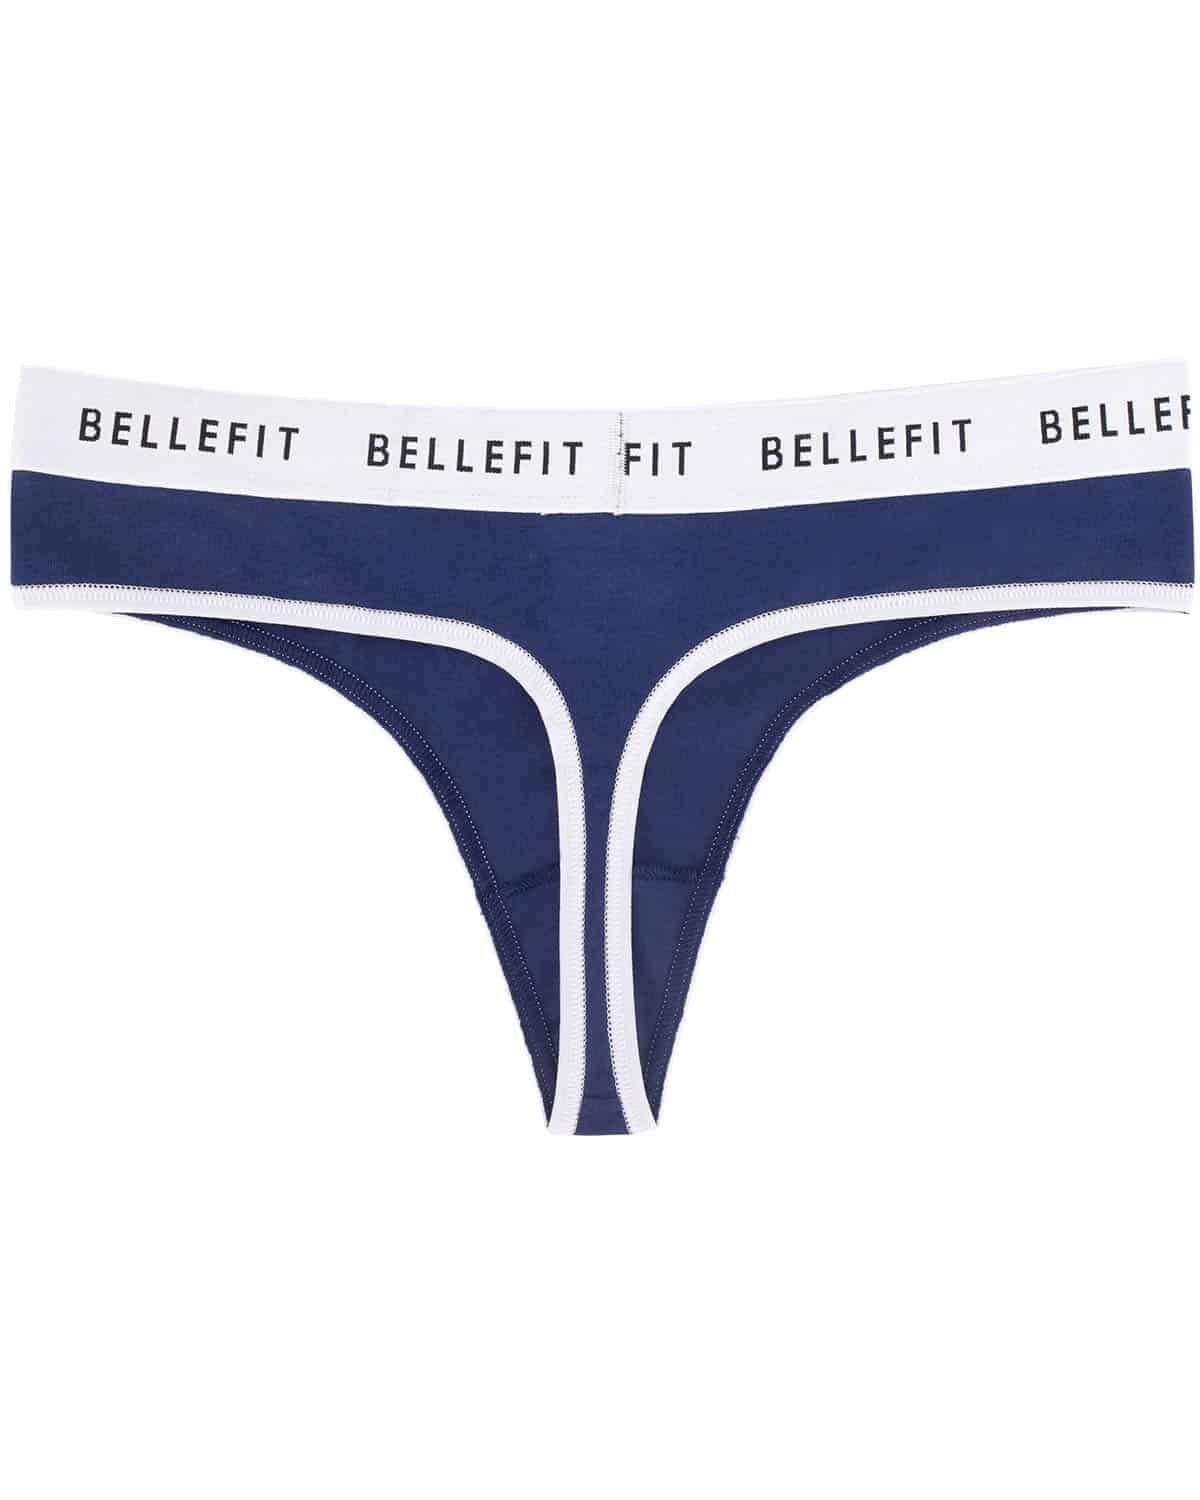 Buy Garfield women striped thong cotton panty online at Wearitin